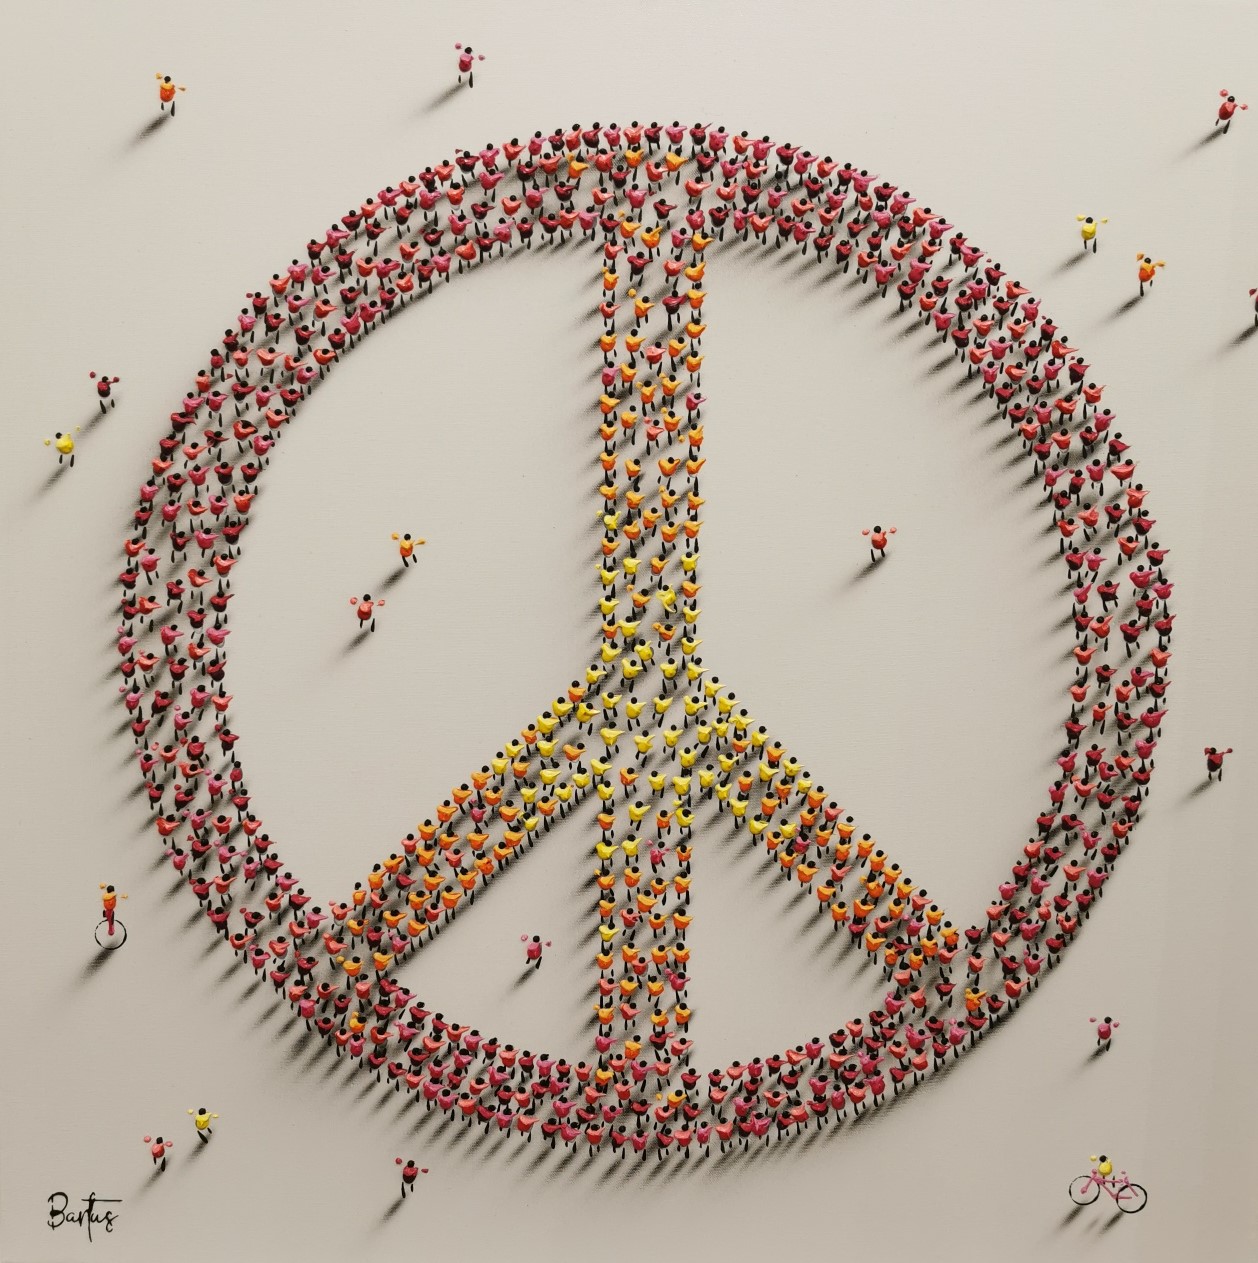 Peace by Francisco Bartus